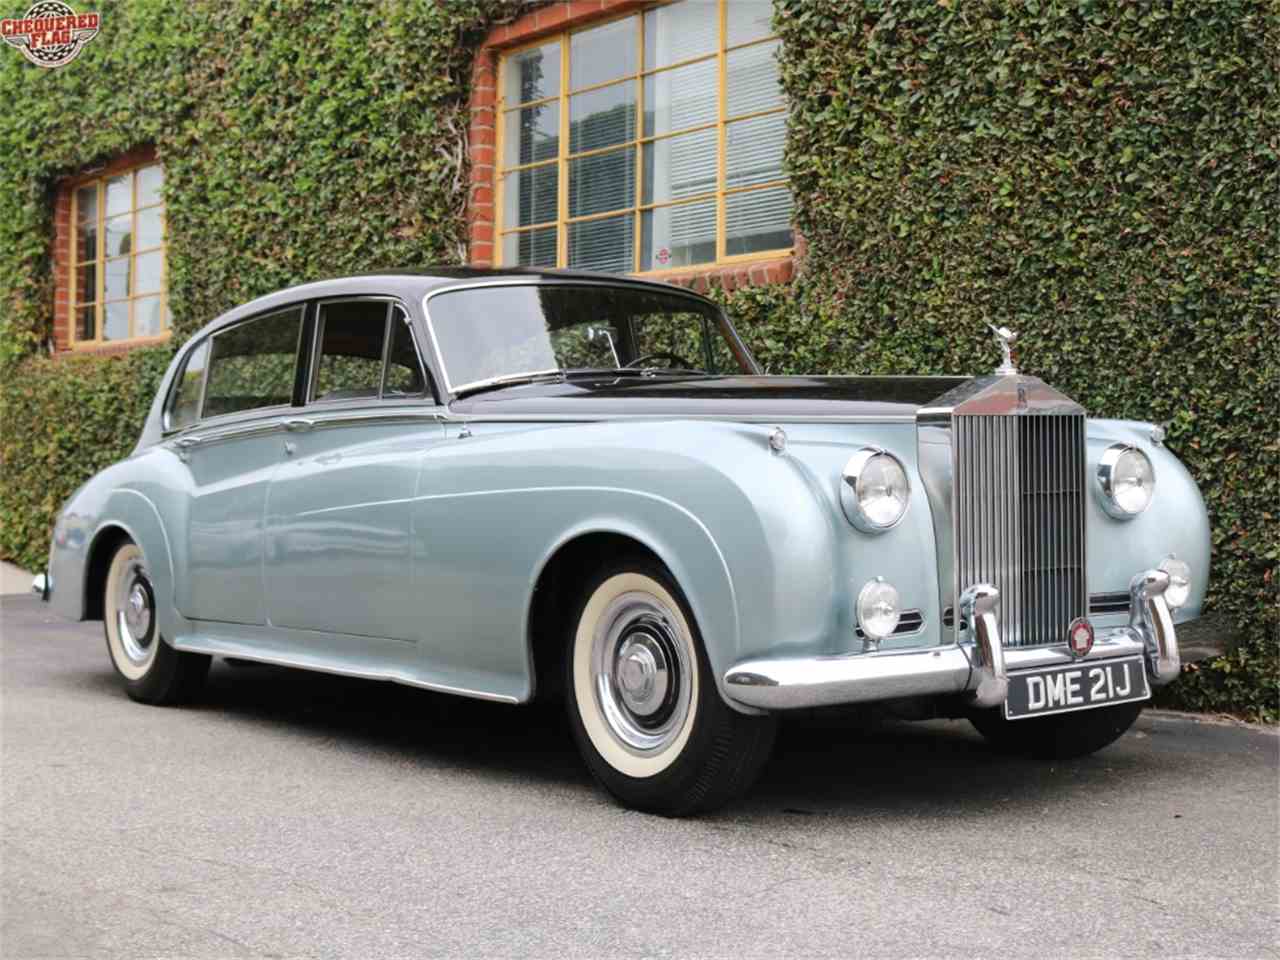 1959 Rolls Royce Silver Cloud for Sale | ClassicCars.com | CC-881005